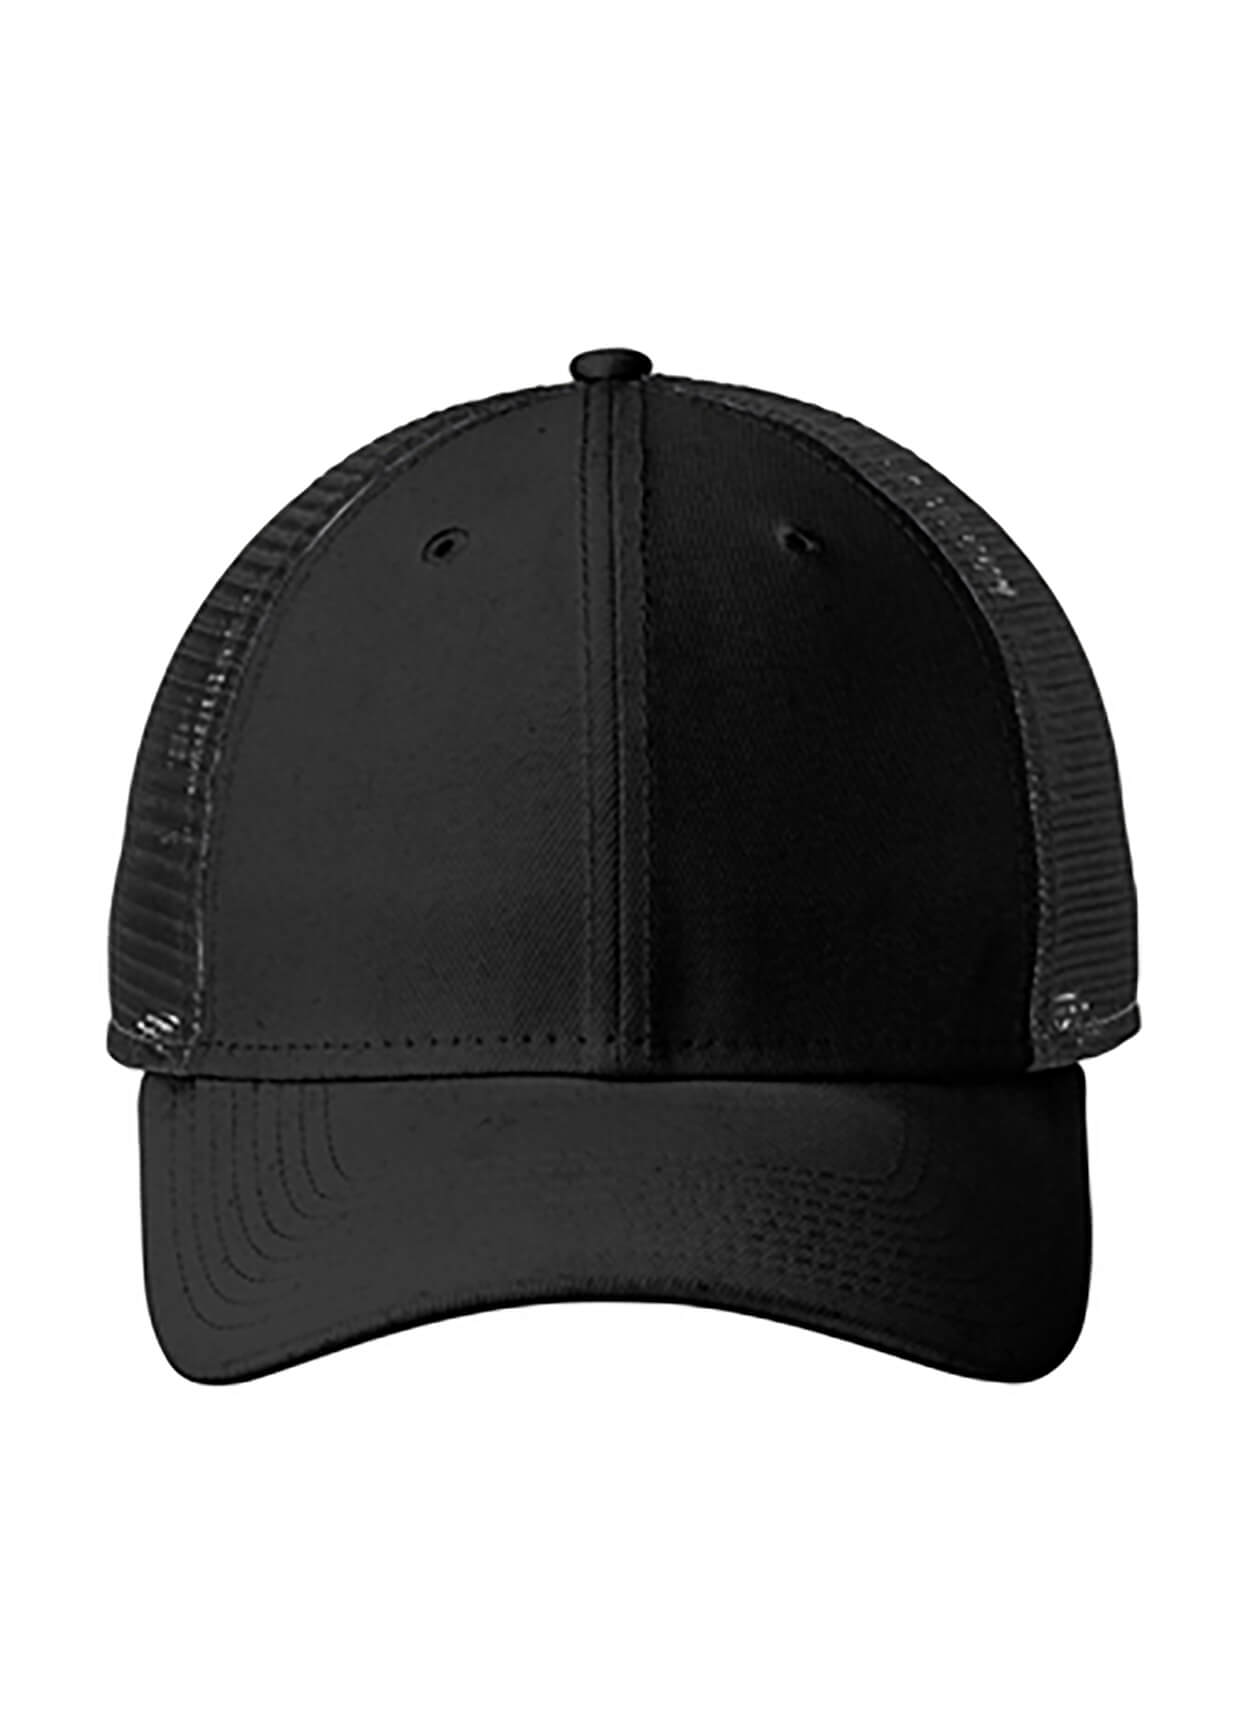 New Era Black Recycled Snapback Cap